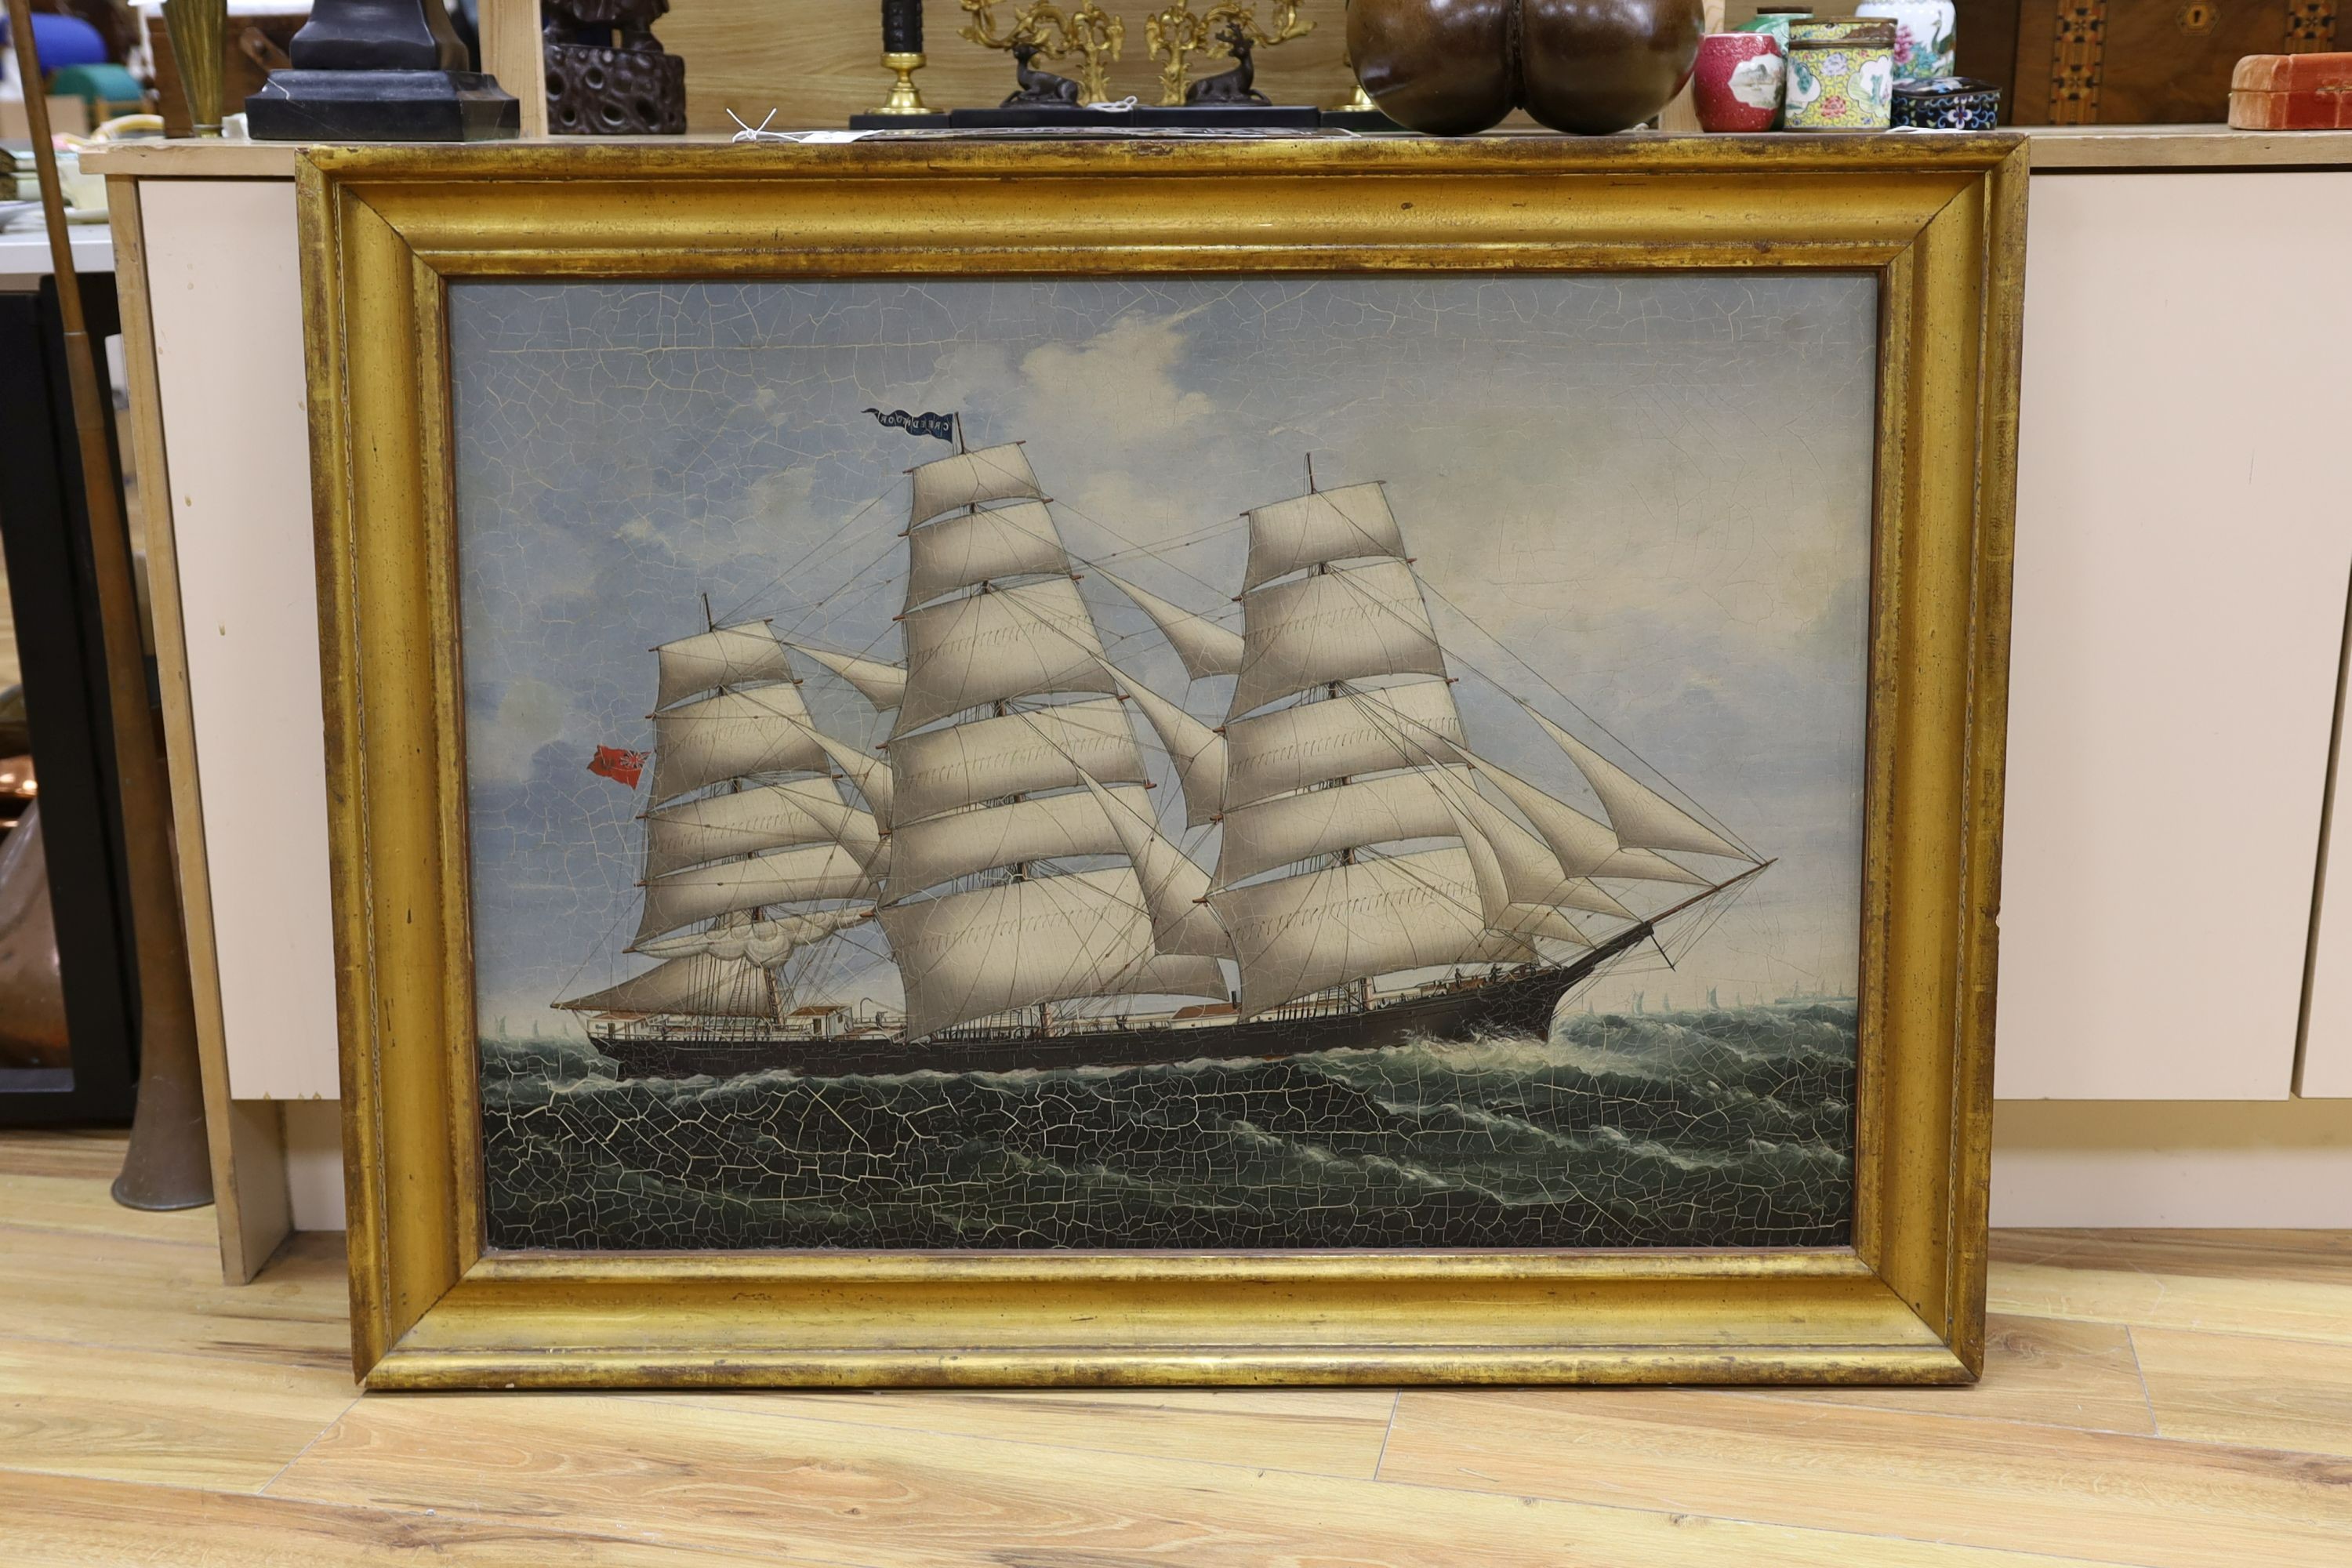 English School, oil on canvas, Portrait of the clipper ship Creadmoor, 67 x 95cm